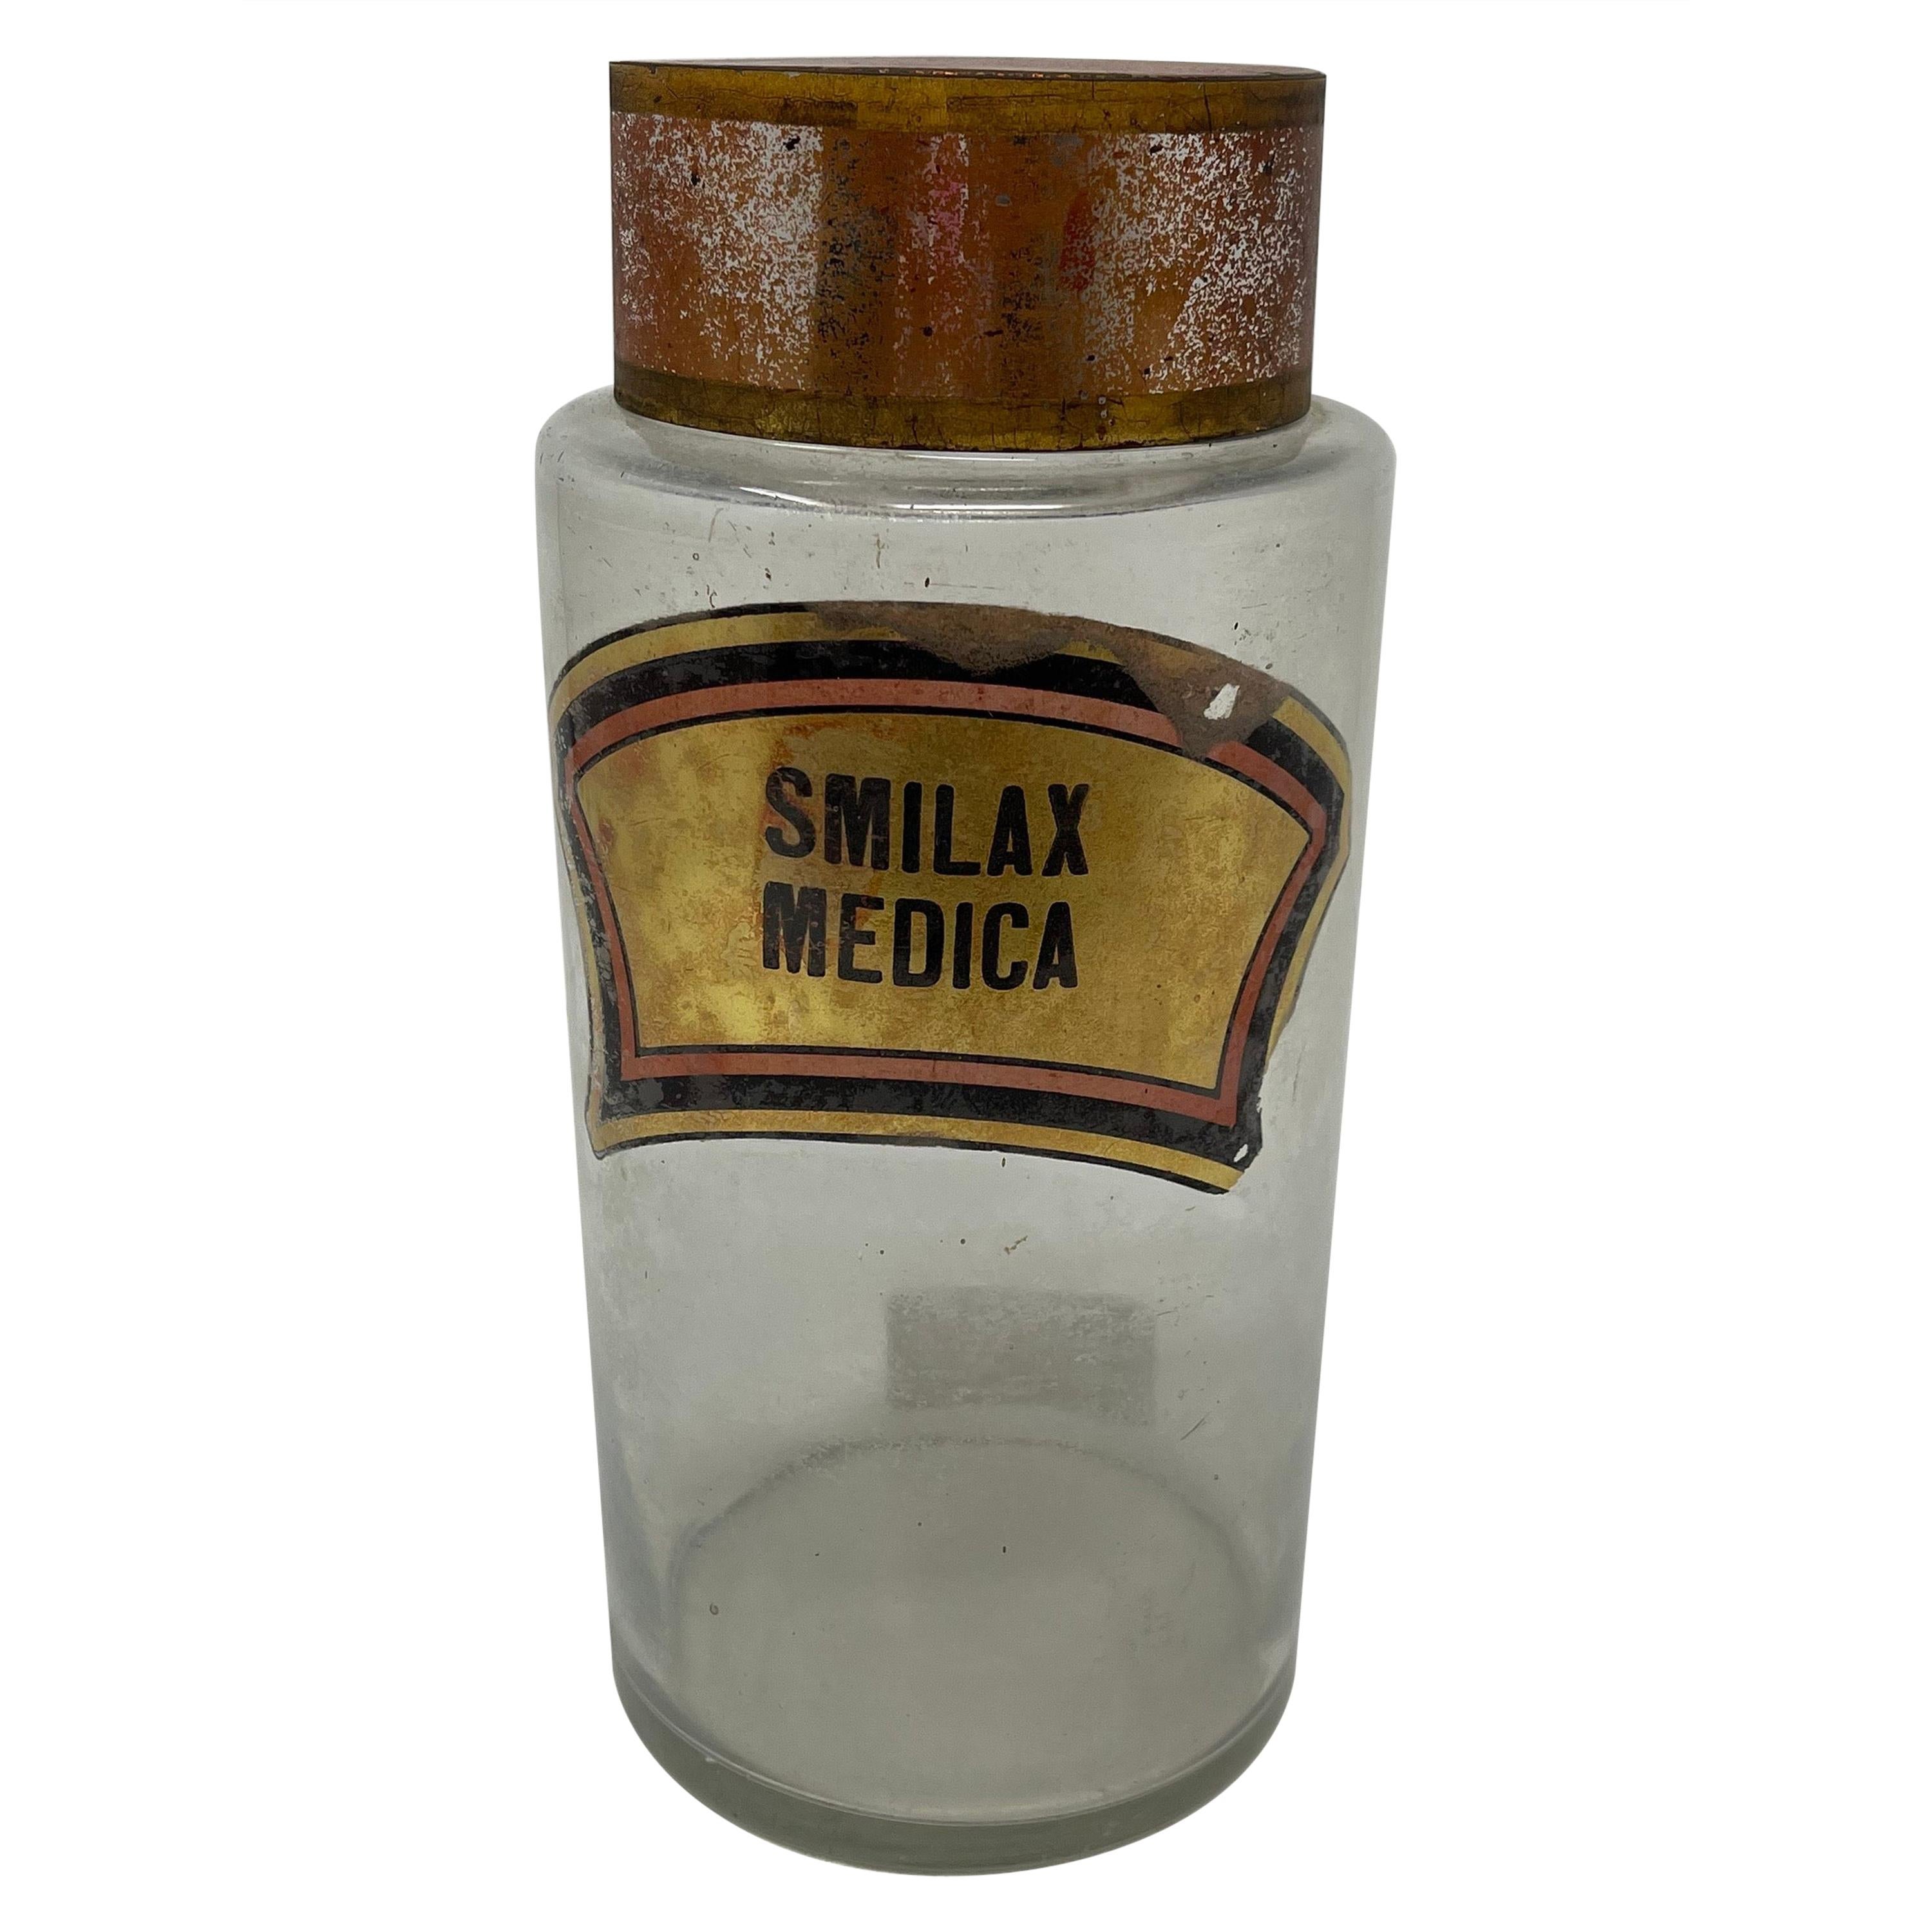 Antique Pharmacy Jar “Smilax Medica” For Sale